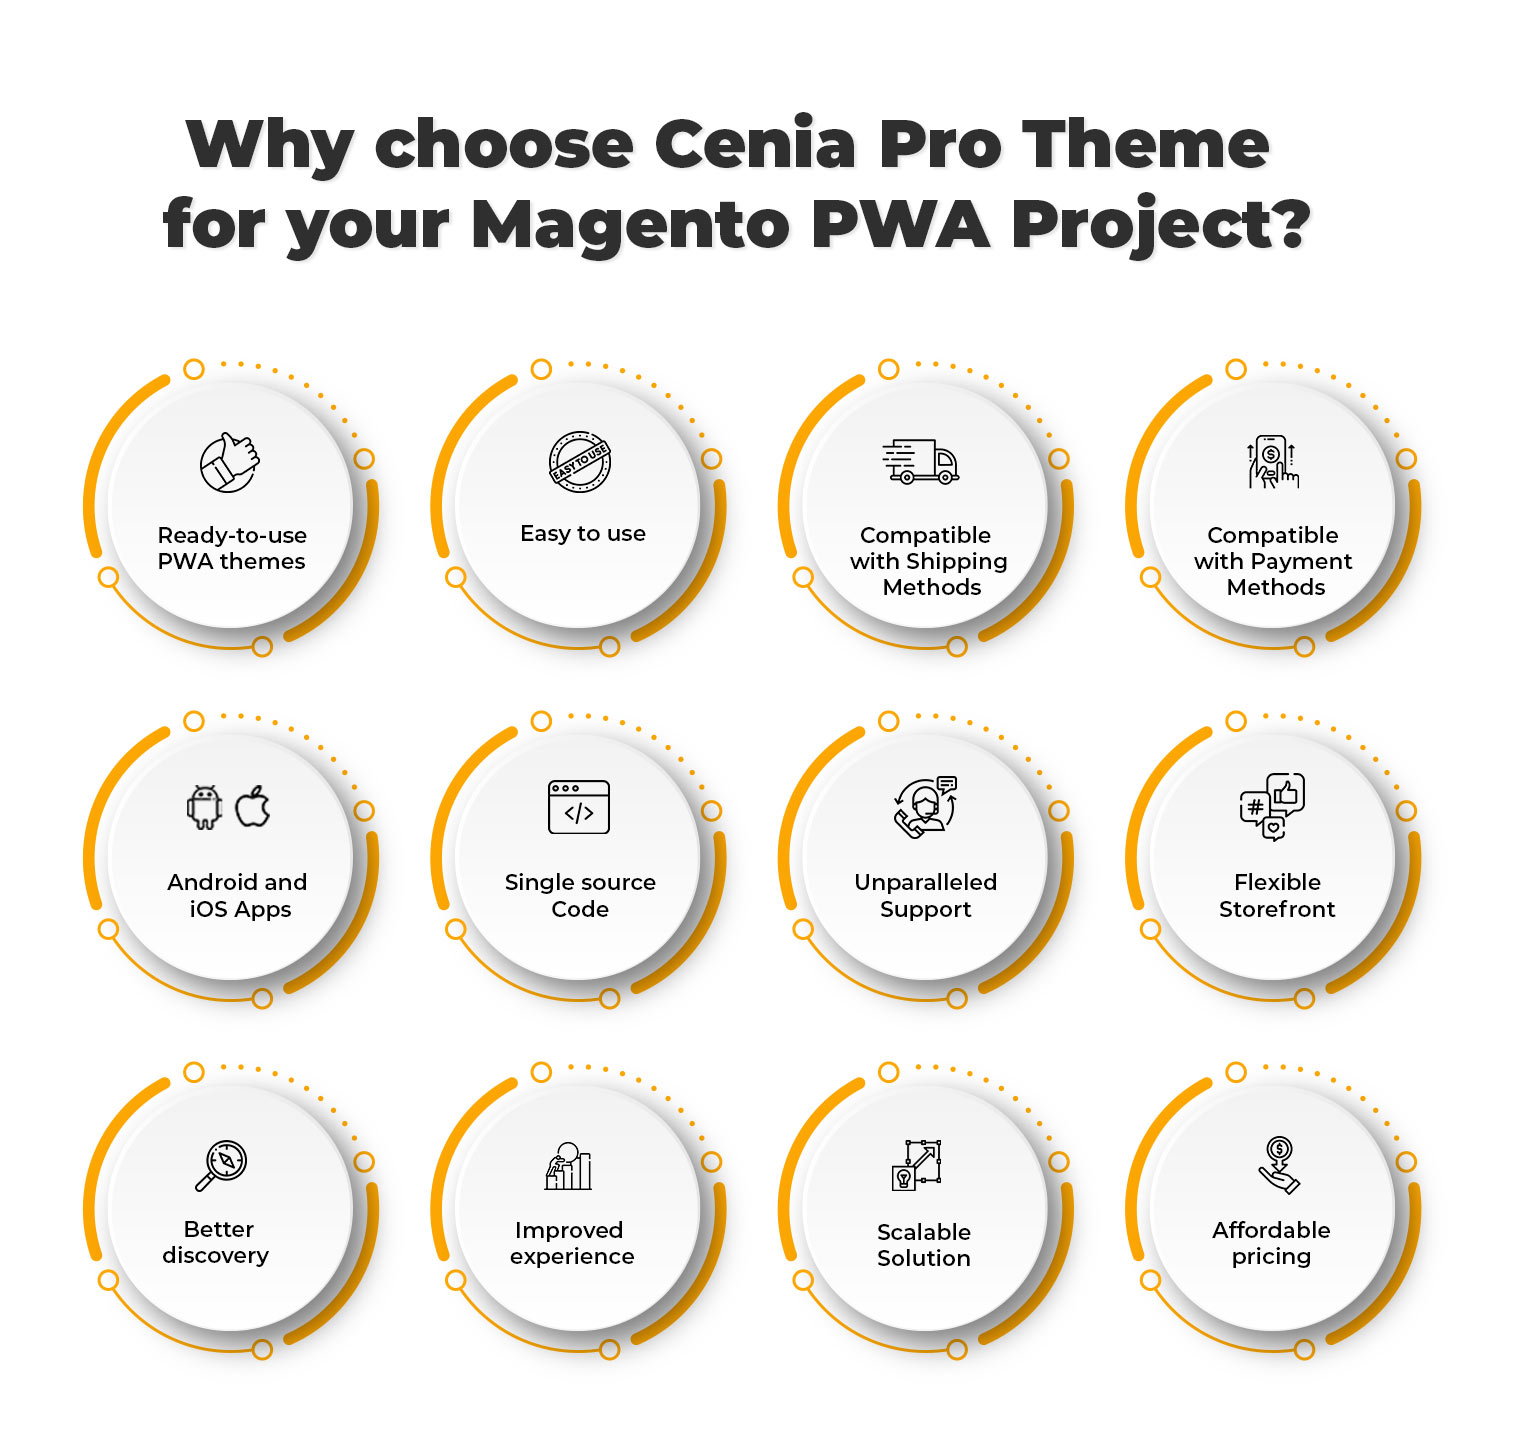 Best Magento PWA  providers: Why choose Cenia Pro Theme?